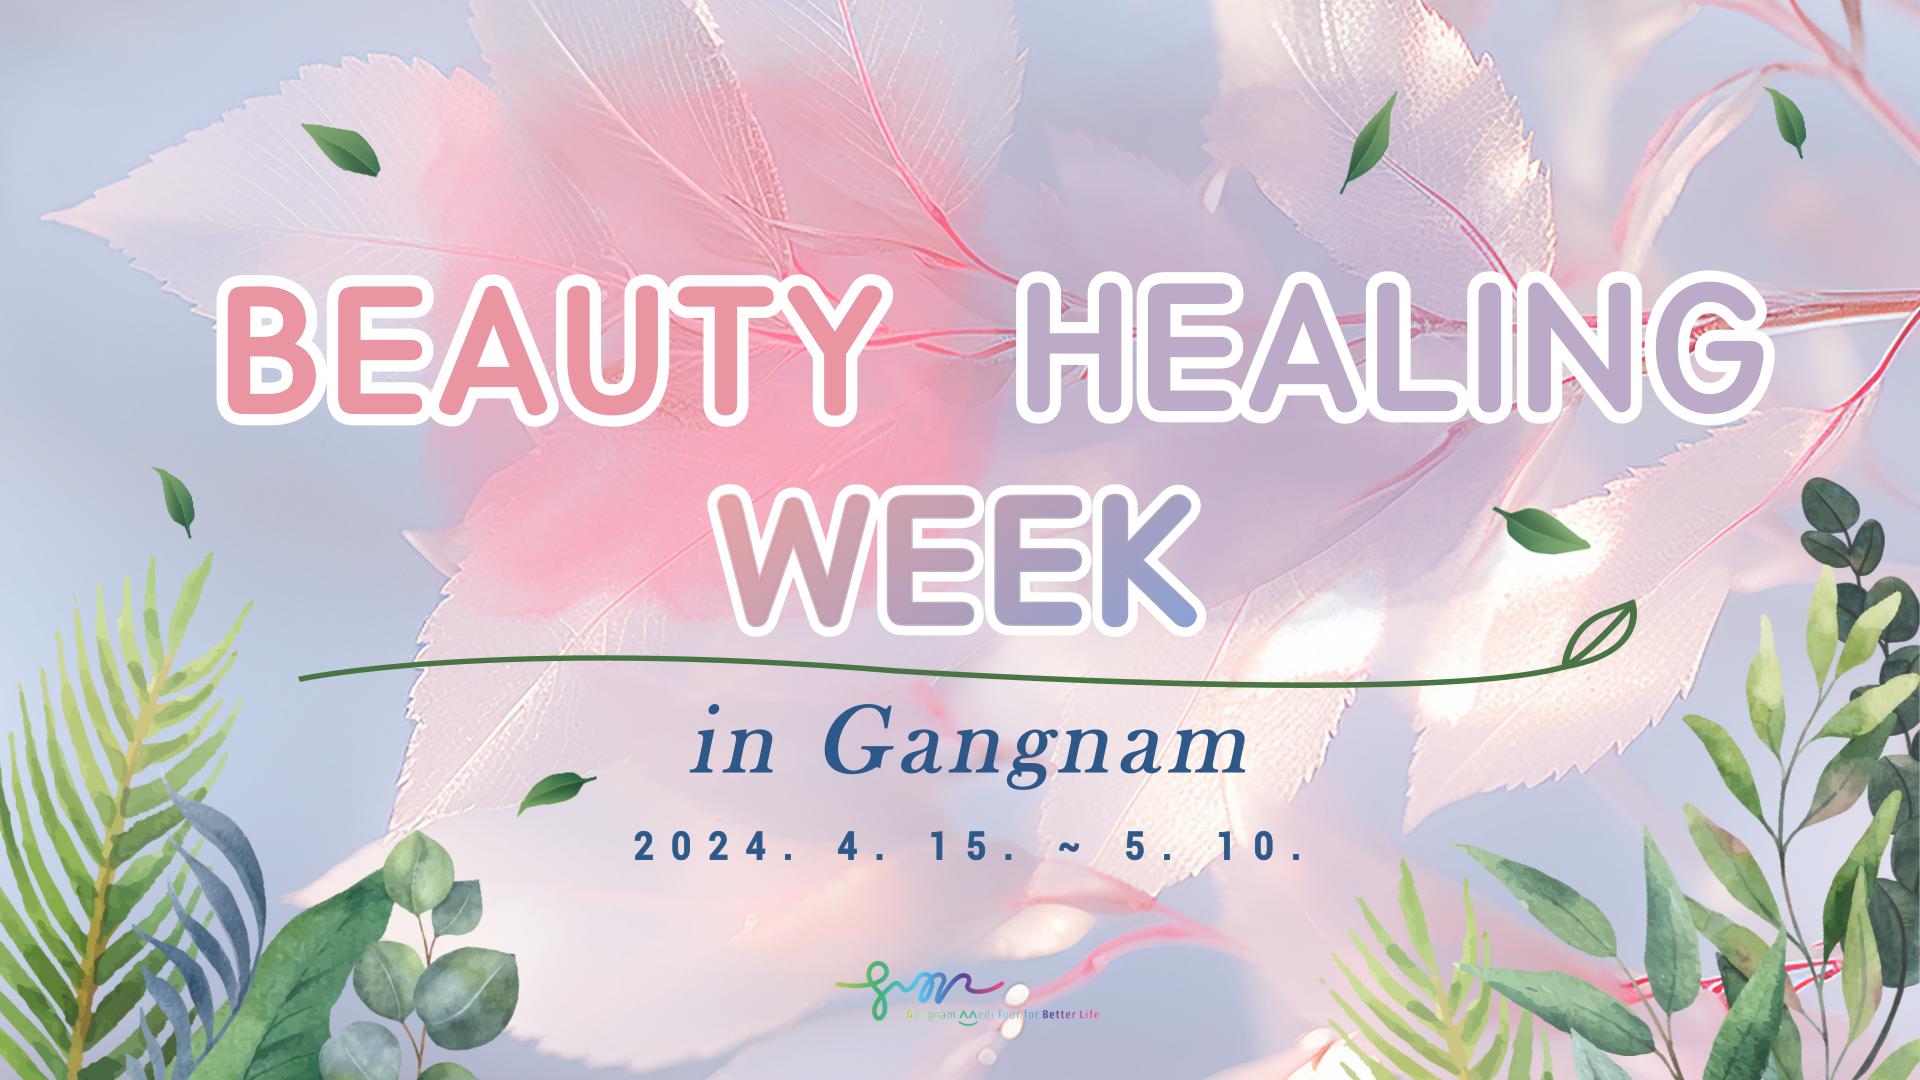 <p>Beauty and Healing Weeks in Gangnam</p>
